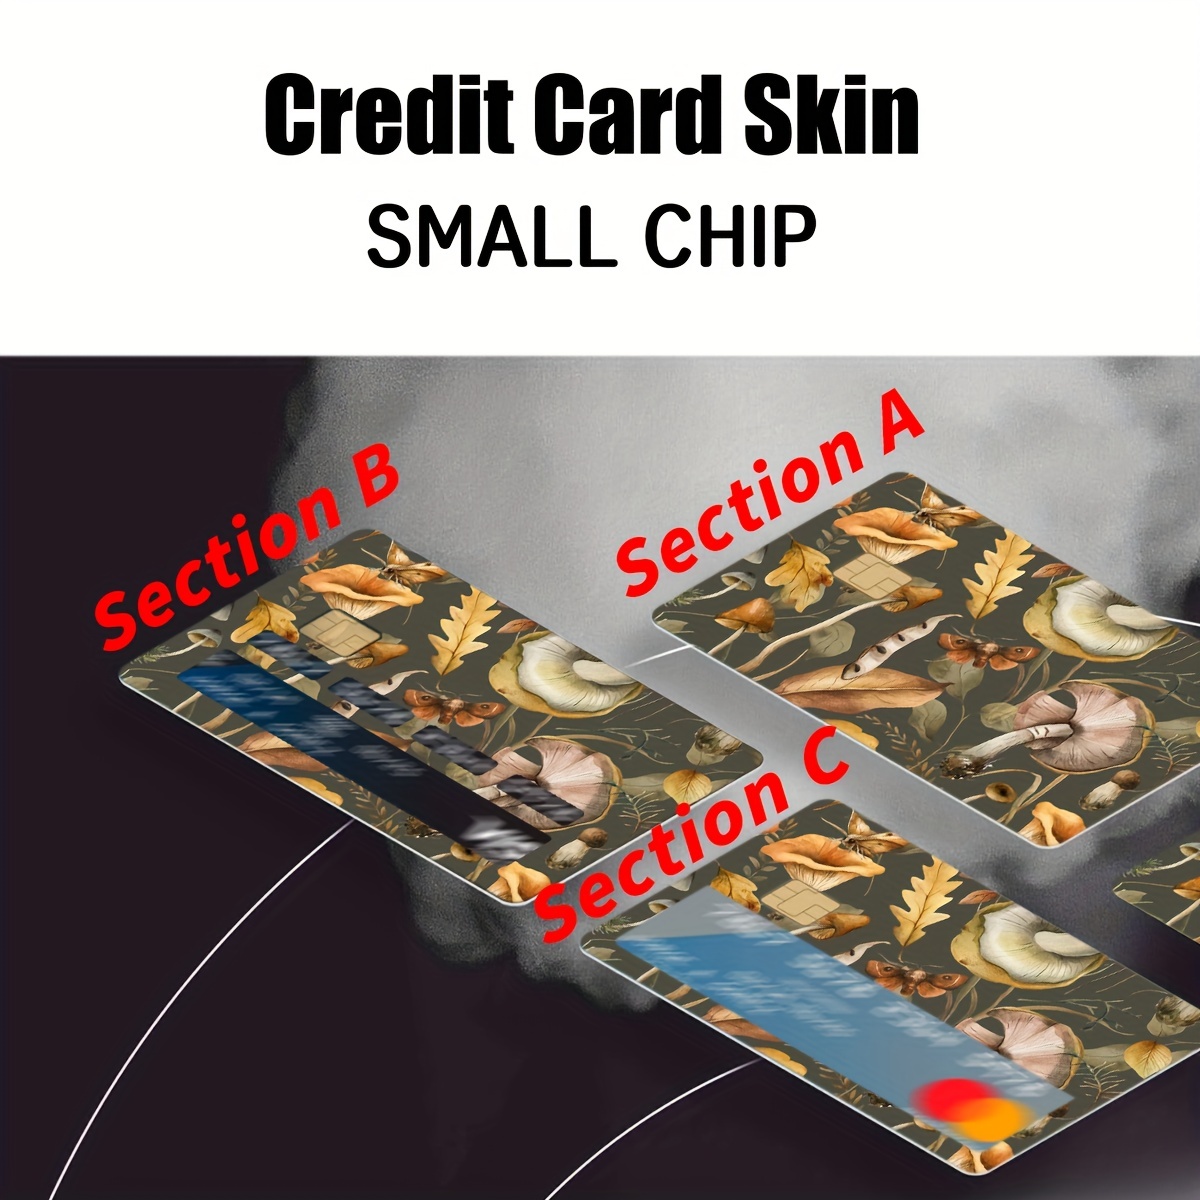 Credit Card Skin Sticker Small Chip